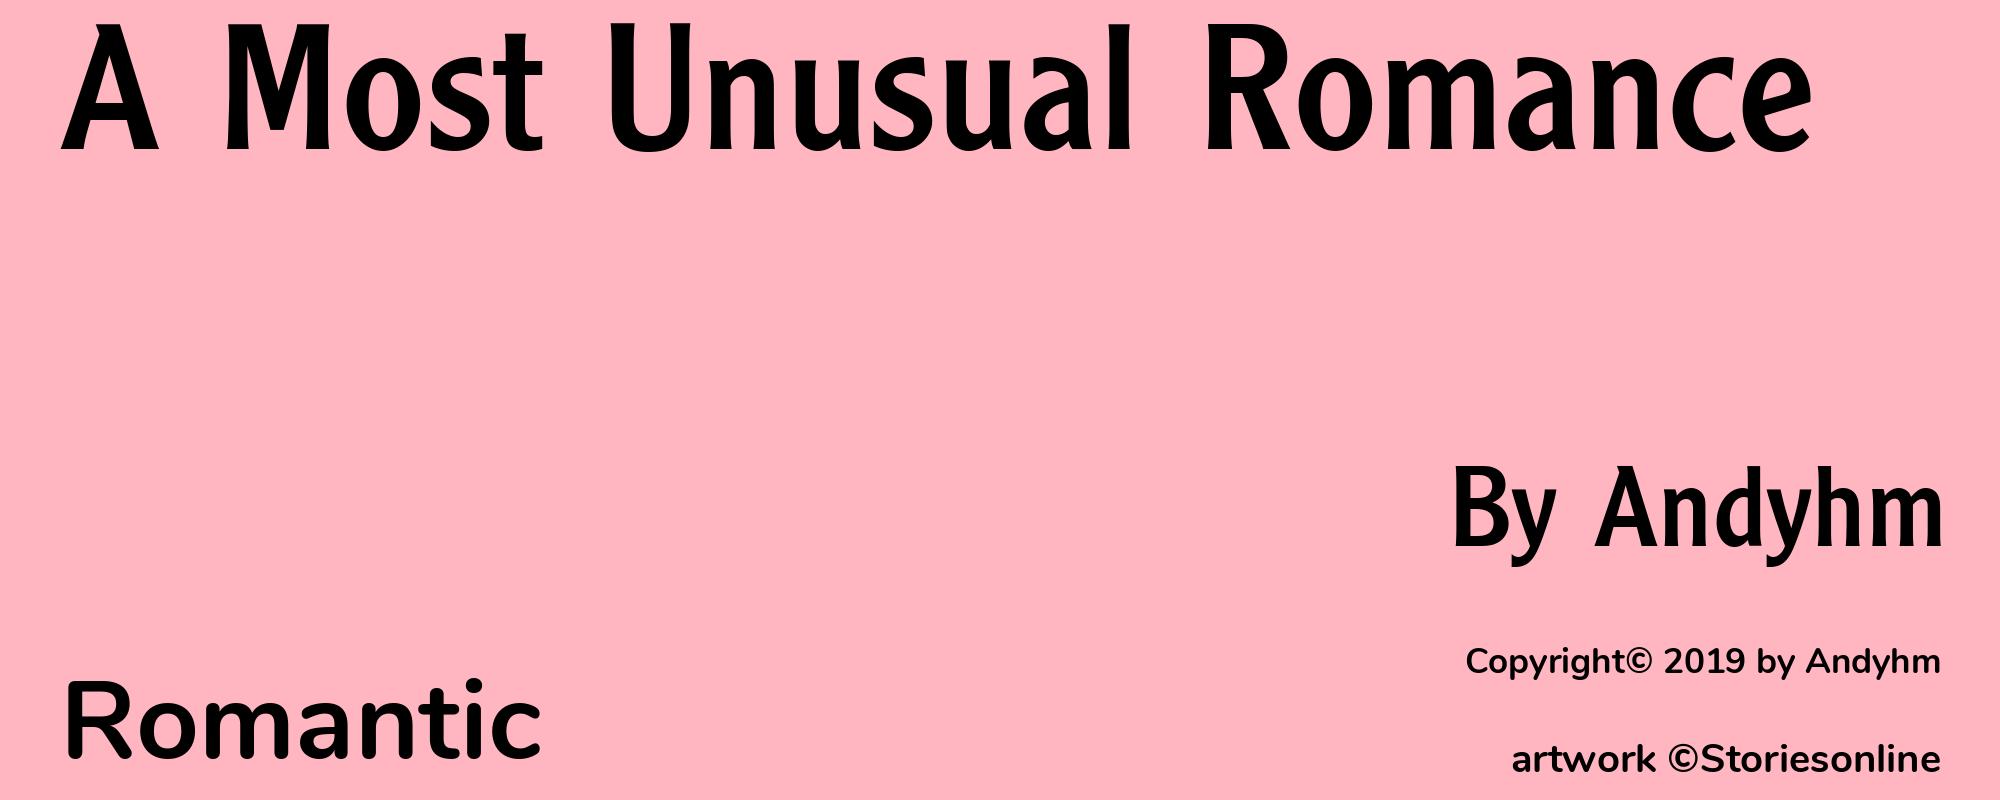 A Most Unusual Romance - Cover